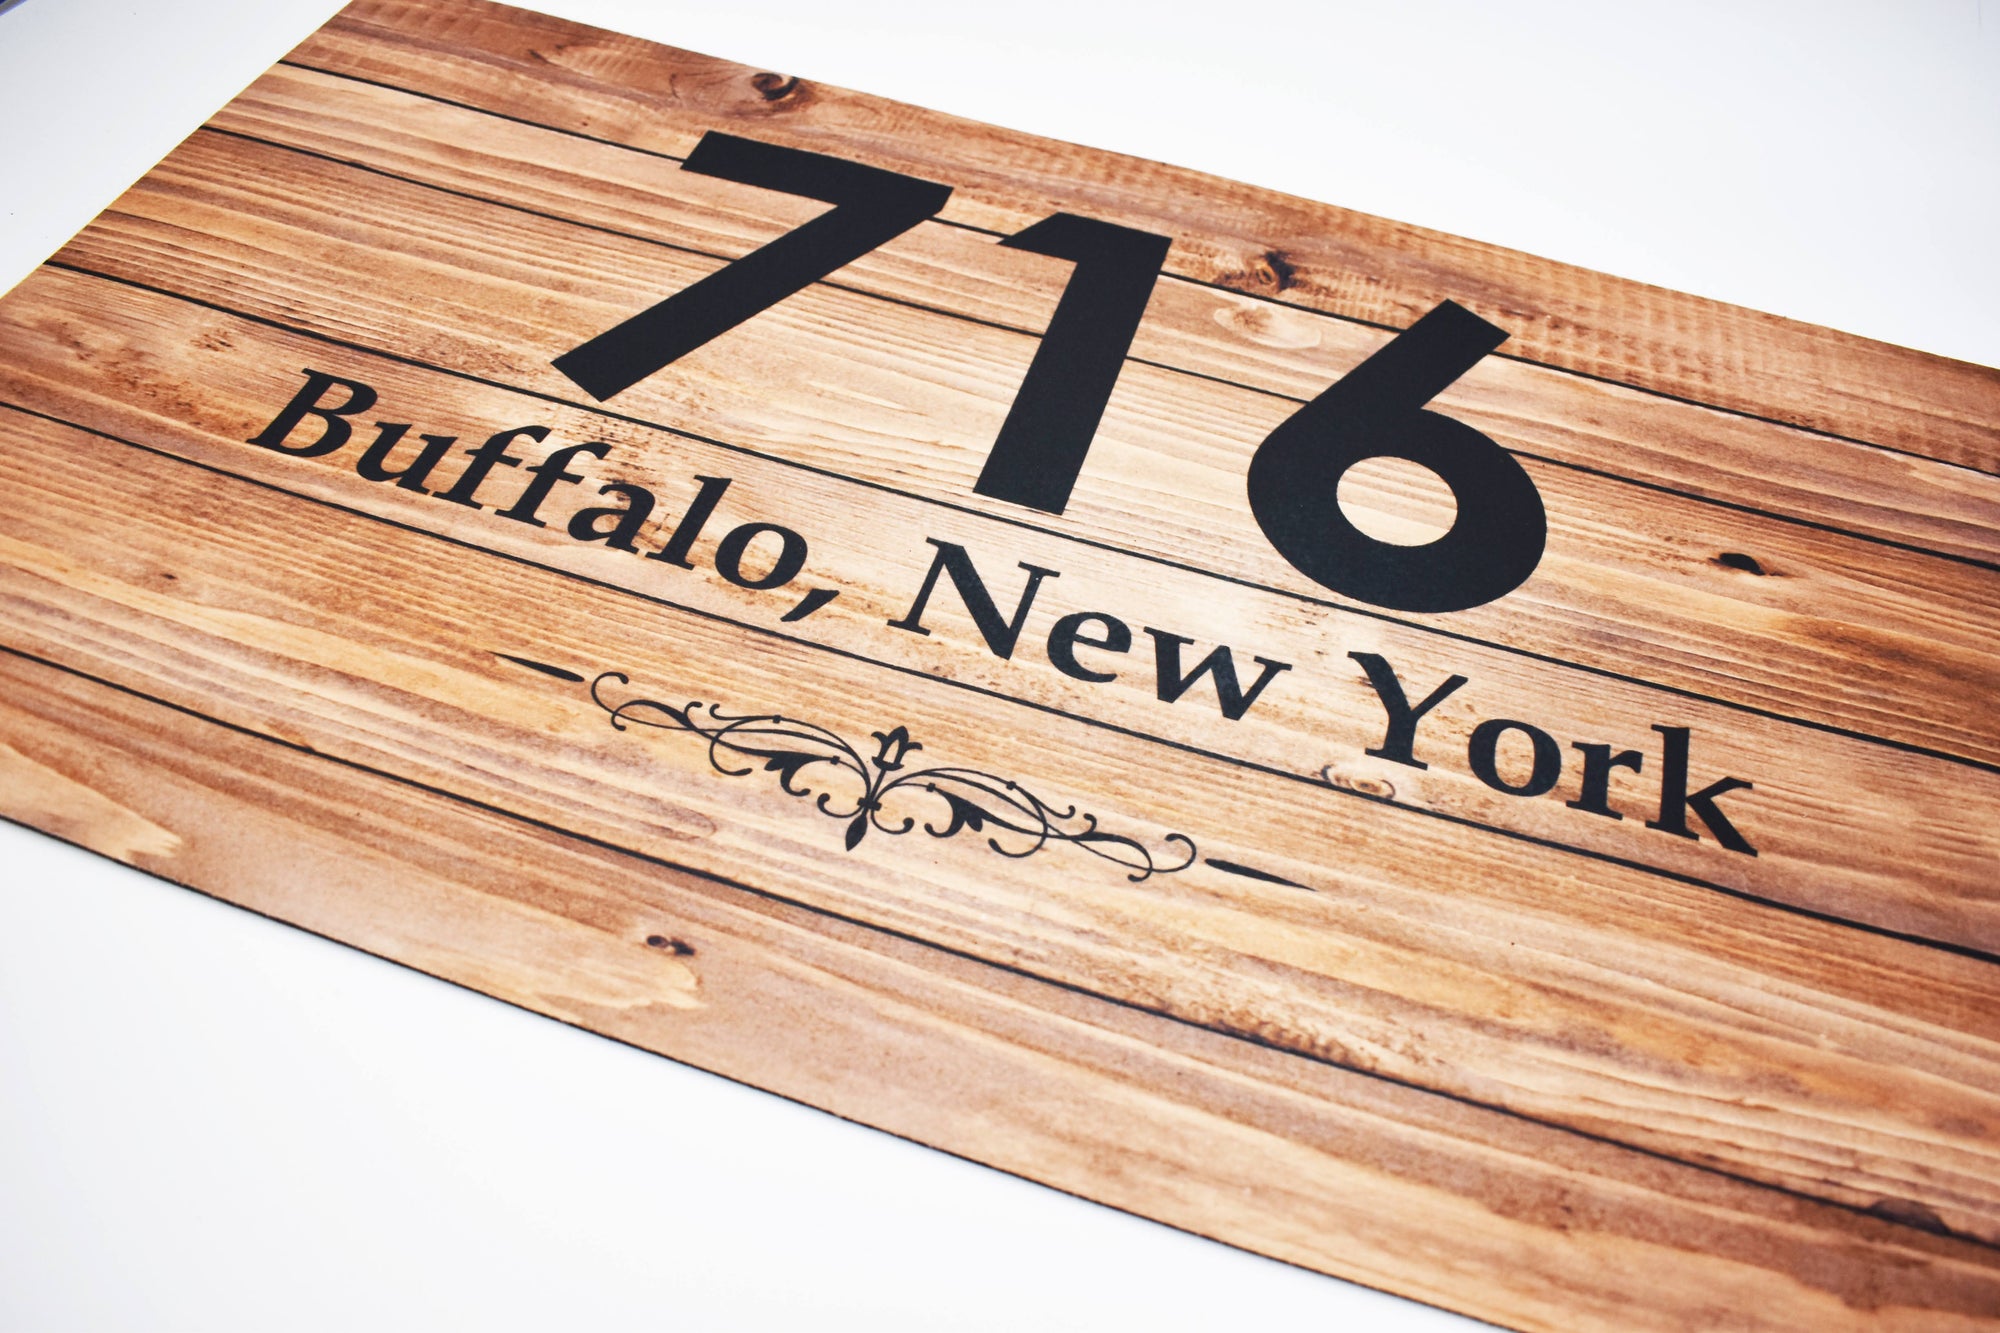 Buffalo, New York Wooden Plank Background Doormat